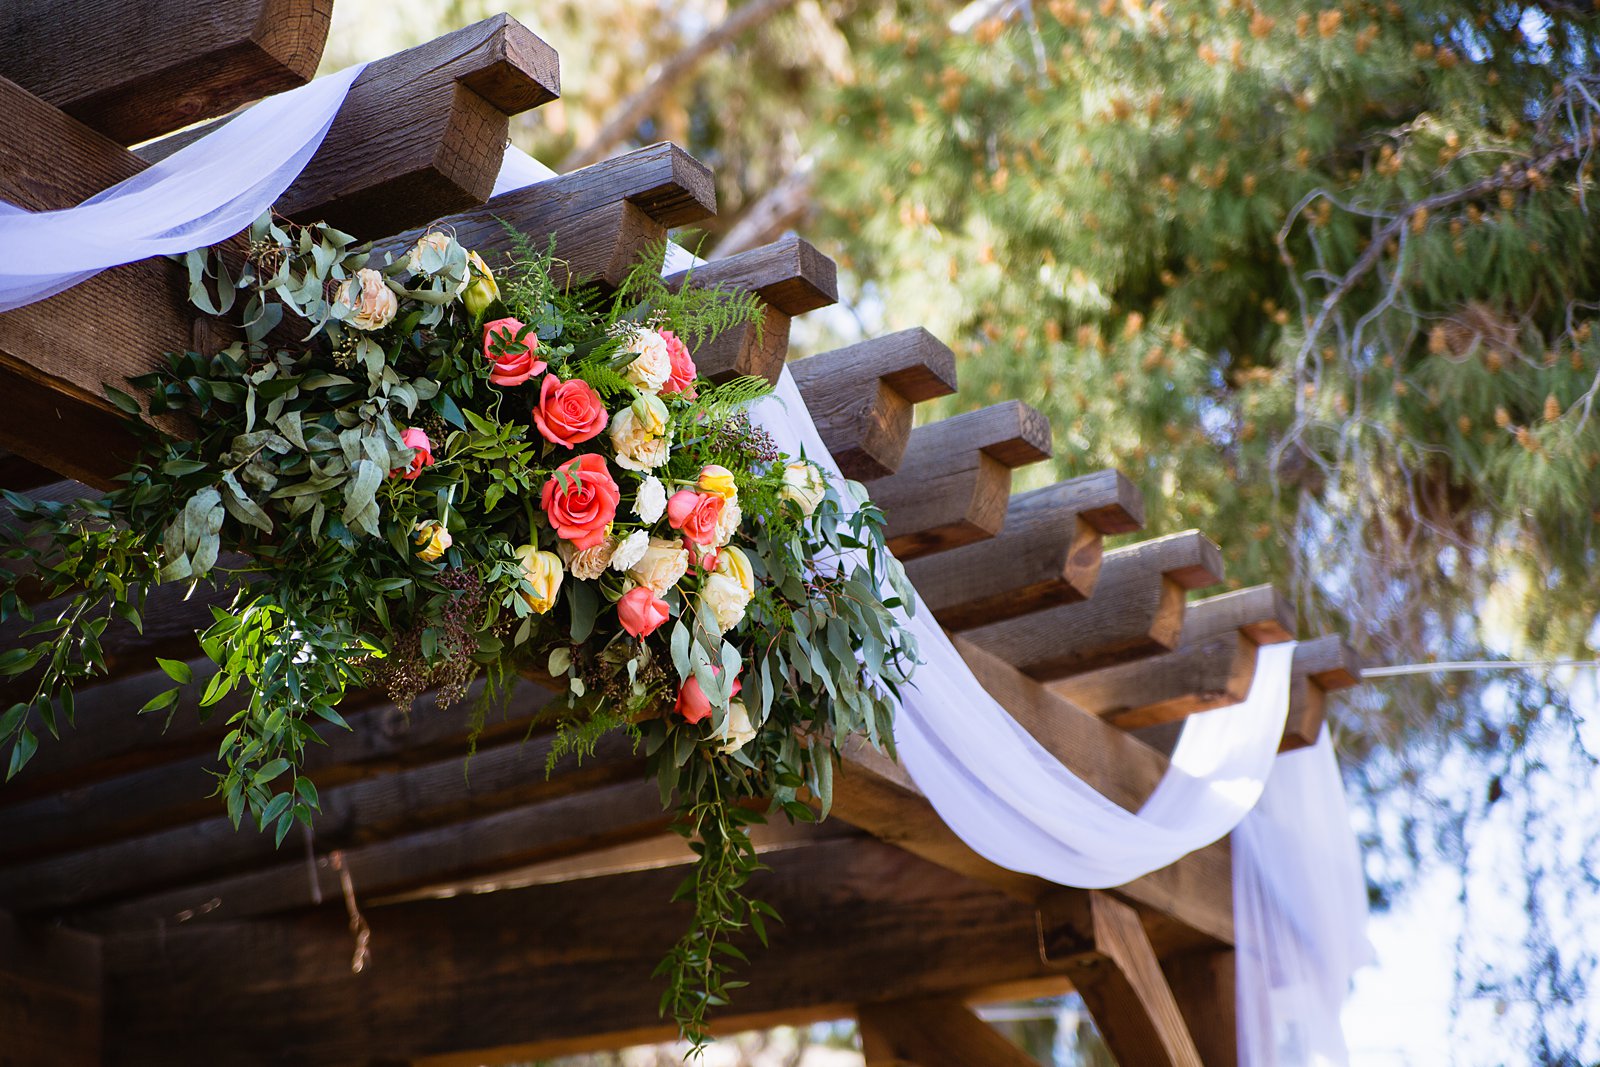 Rustic wedding ceremony decoration at Schnepf Farms by Arizona wedding photographer PMA Photography.